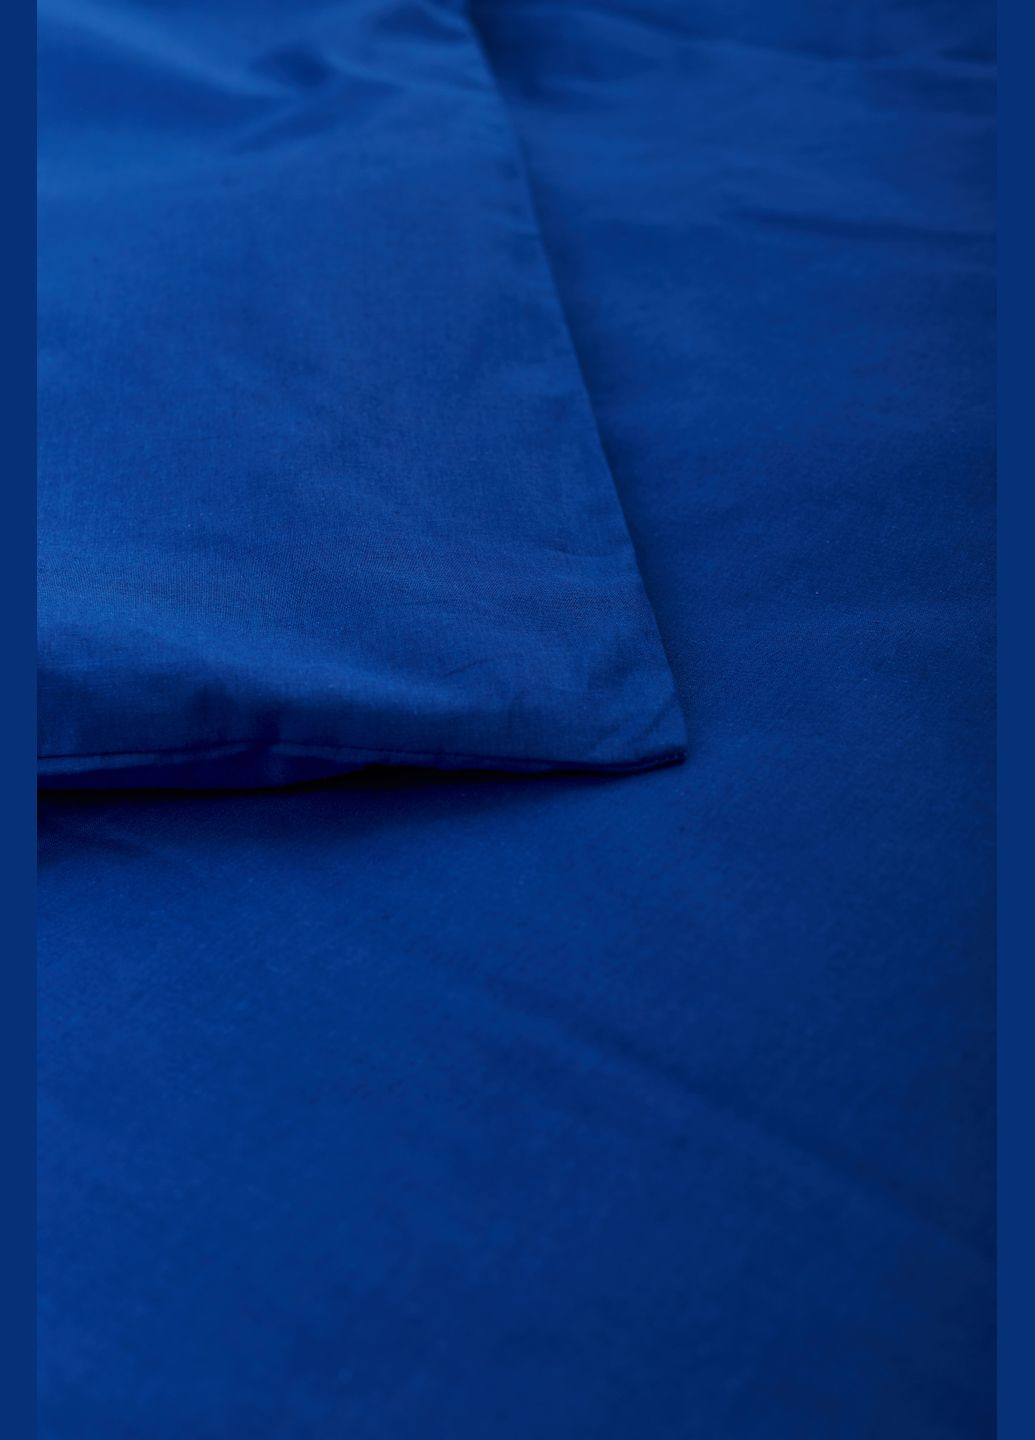 Комплект постельного белья полуторный евро 160х220 наволочки 4х70х70 Бязь Gold Люкс (MS-820000824) Moon&Star blue (285716851)